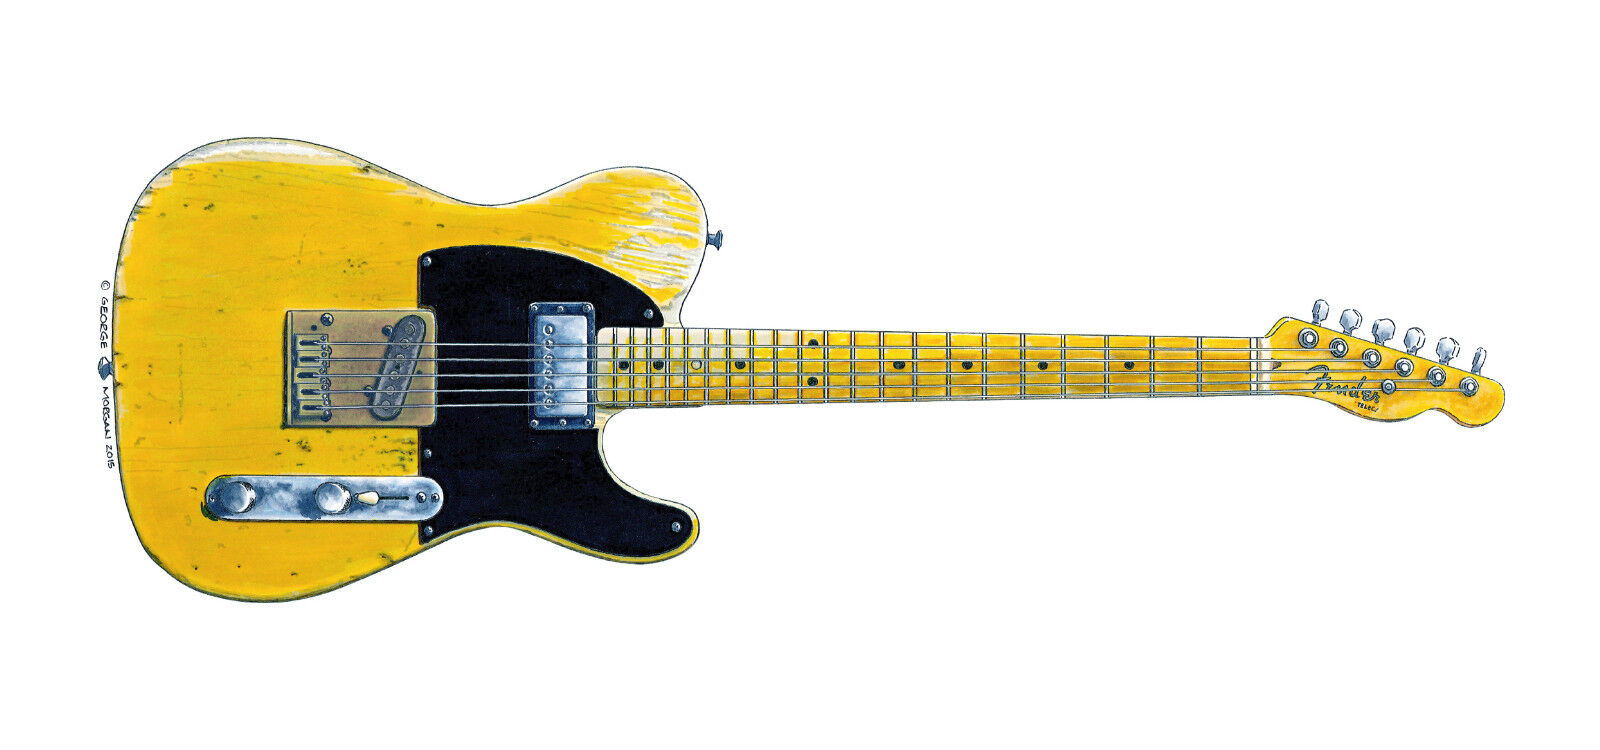 Keith Richards' Fender Telecaster Micawber Greeting Card, DL size